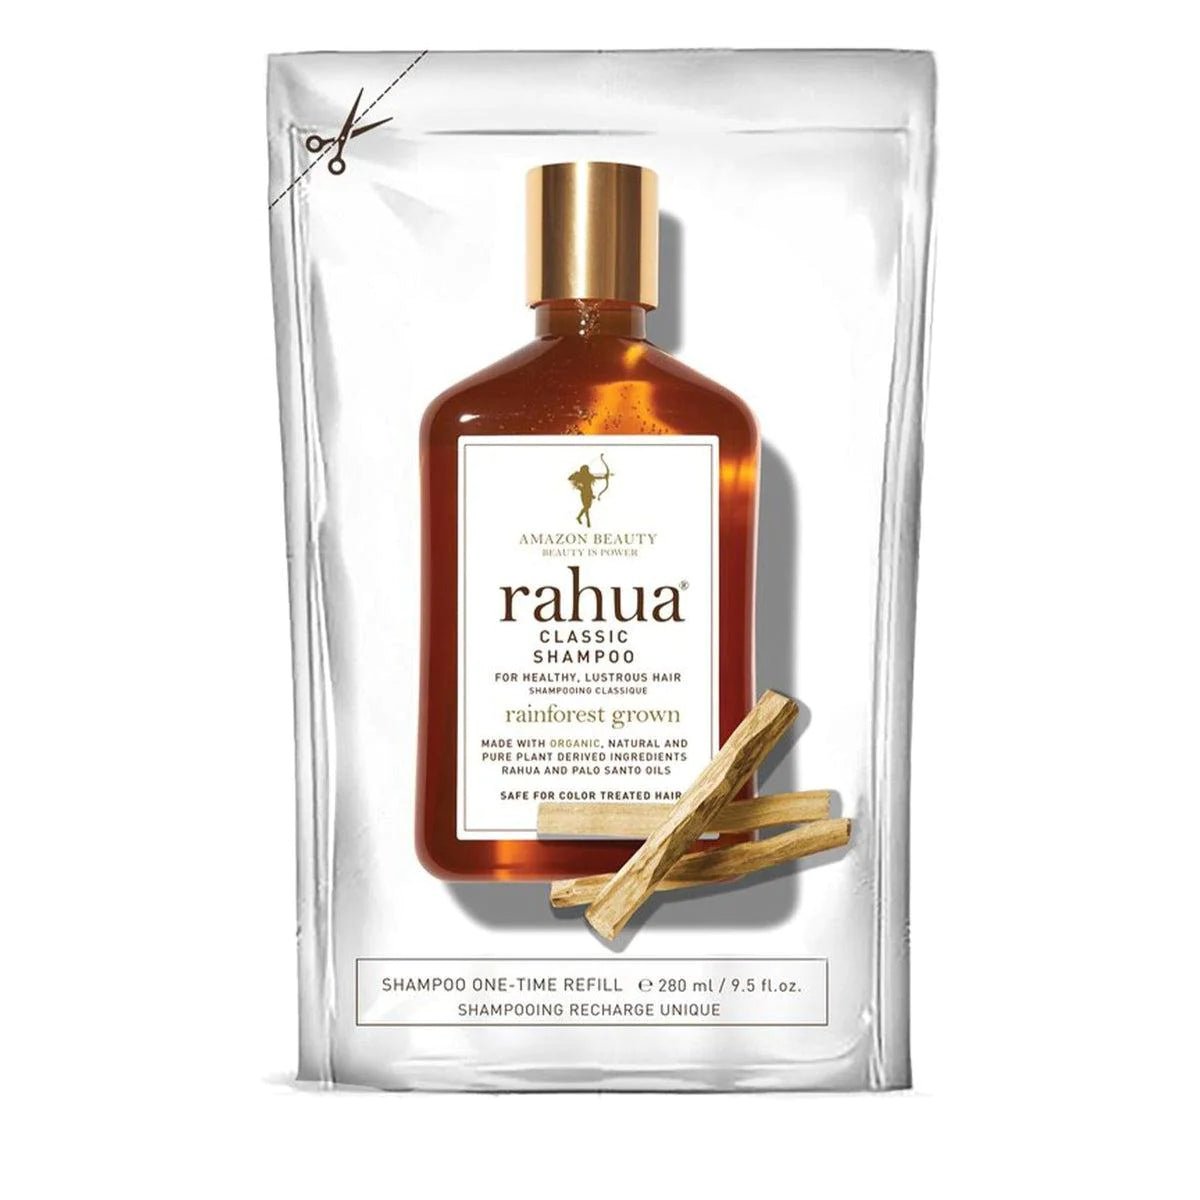 Rahua - Rahua Classic Shampoo - ORESTA clean beauty simplified